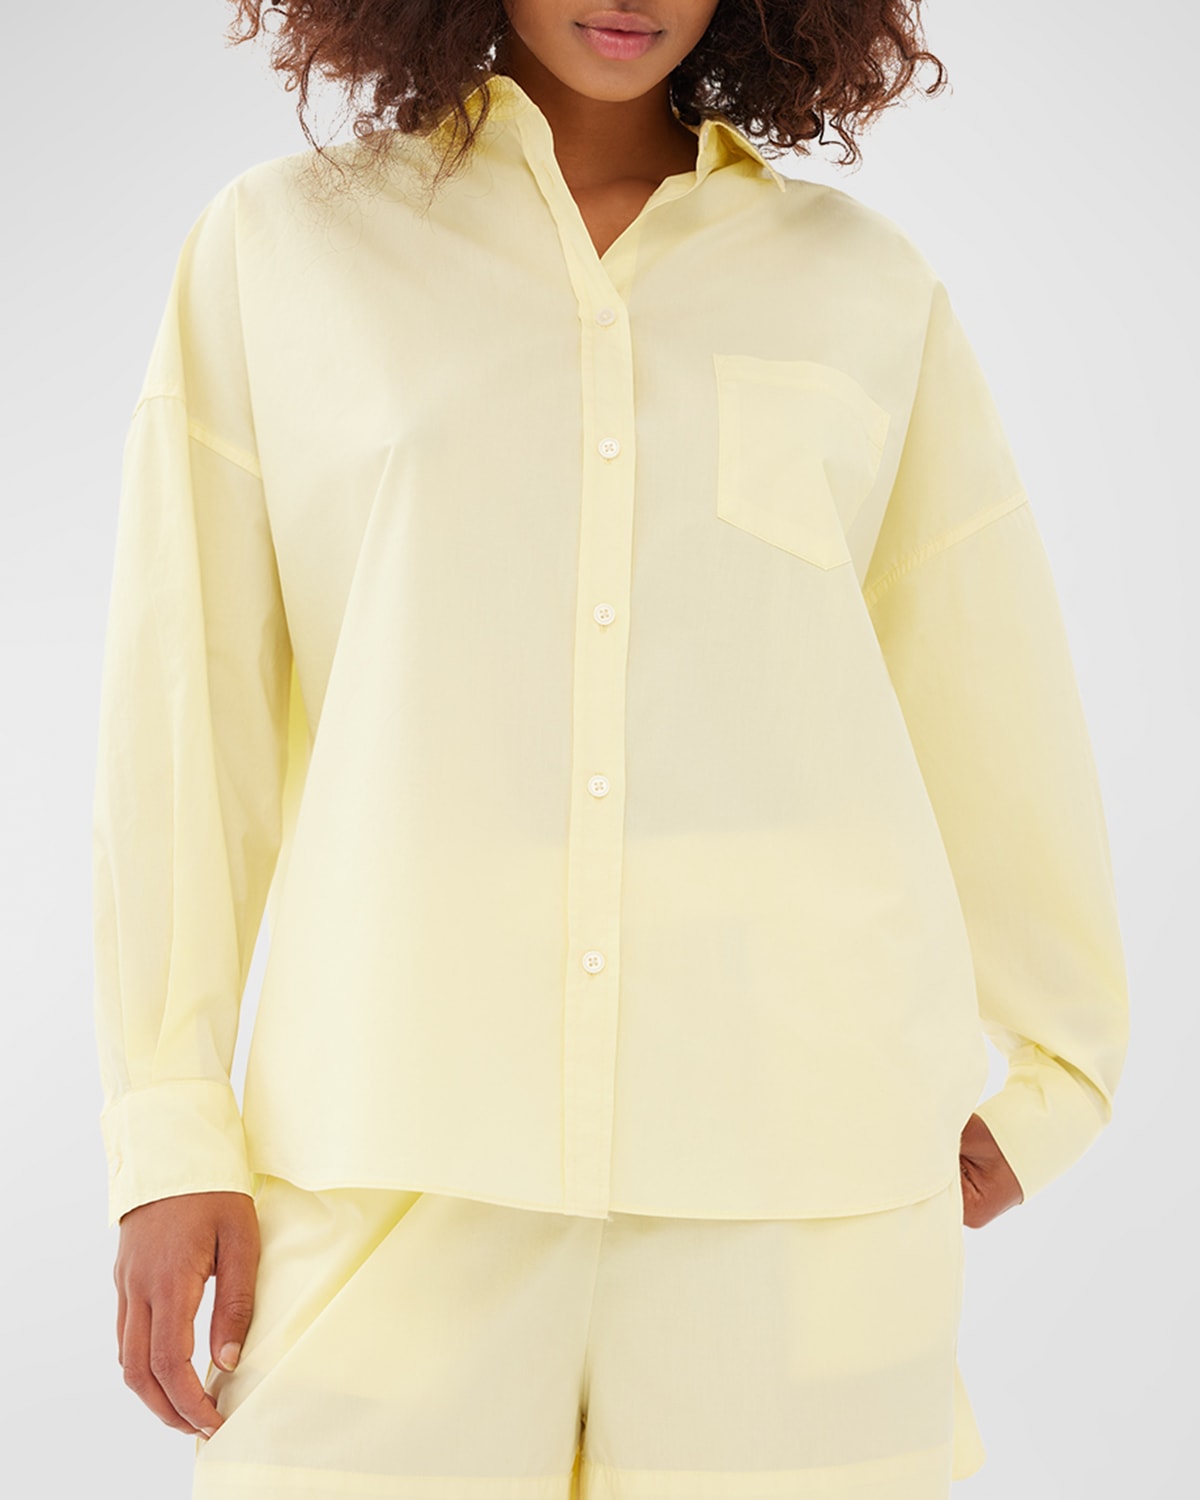 The Chiara Classic Garment-Dyed Cotton Shirt